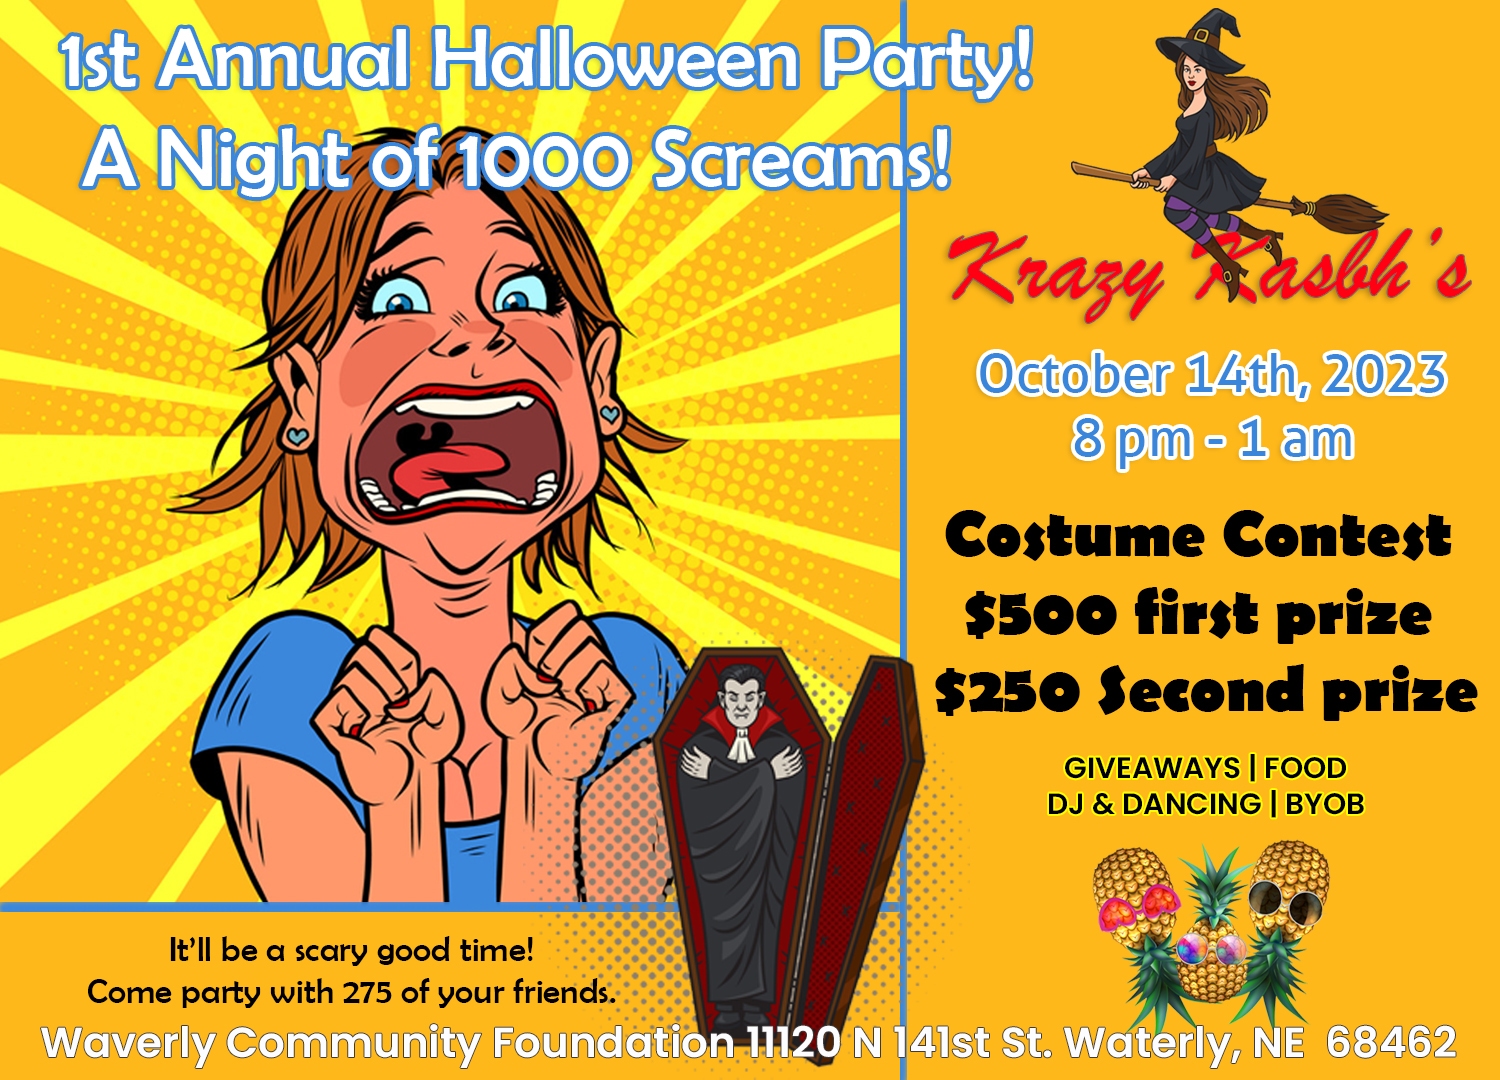 Krazy Kasbh's 1st Annual Halloween Party!